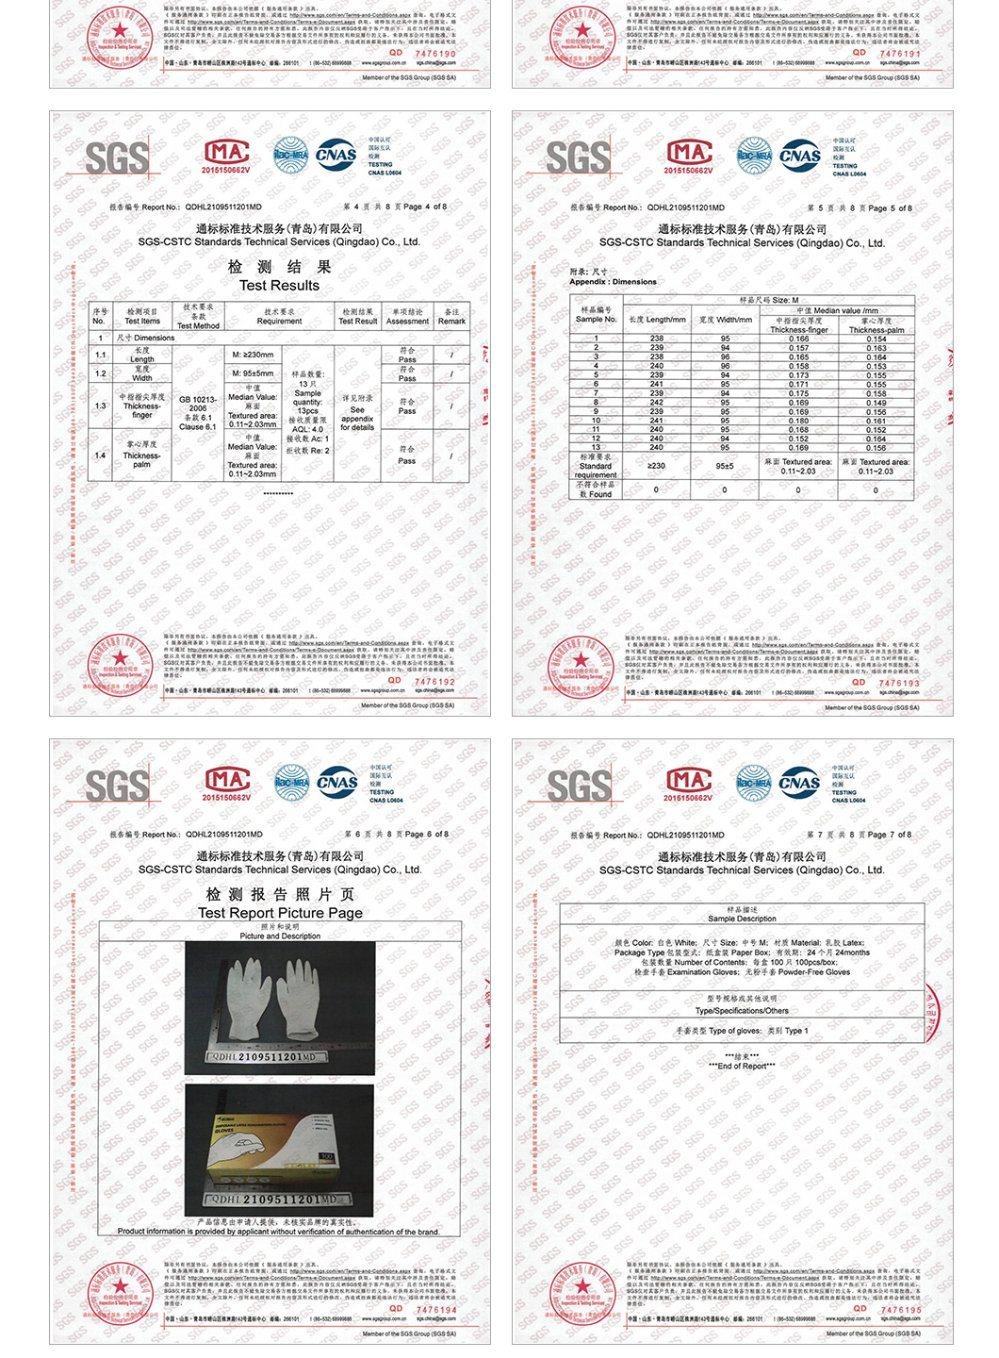 Xs S M L XL XXL Latex Disposable Medical Examination Powder Free White Latex Gloves